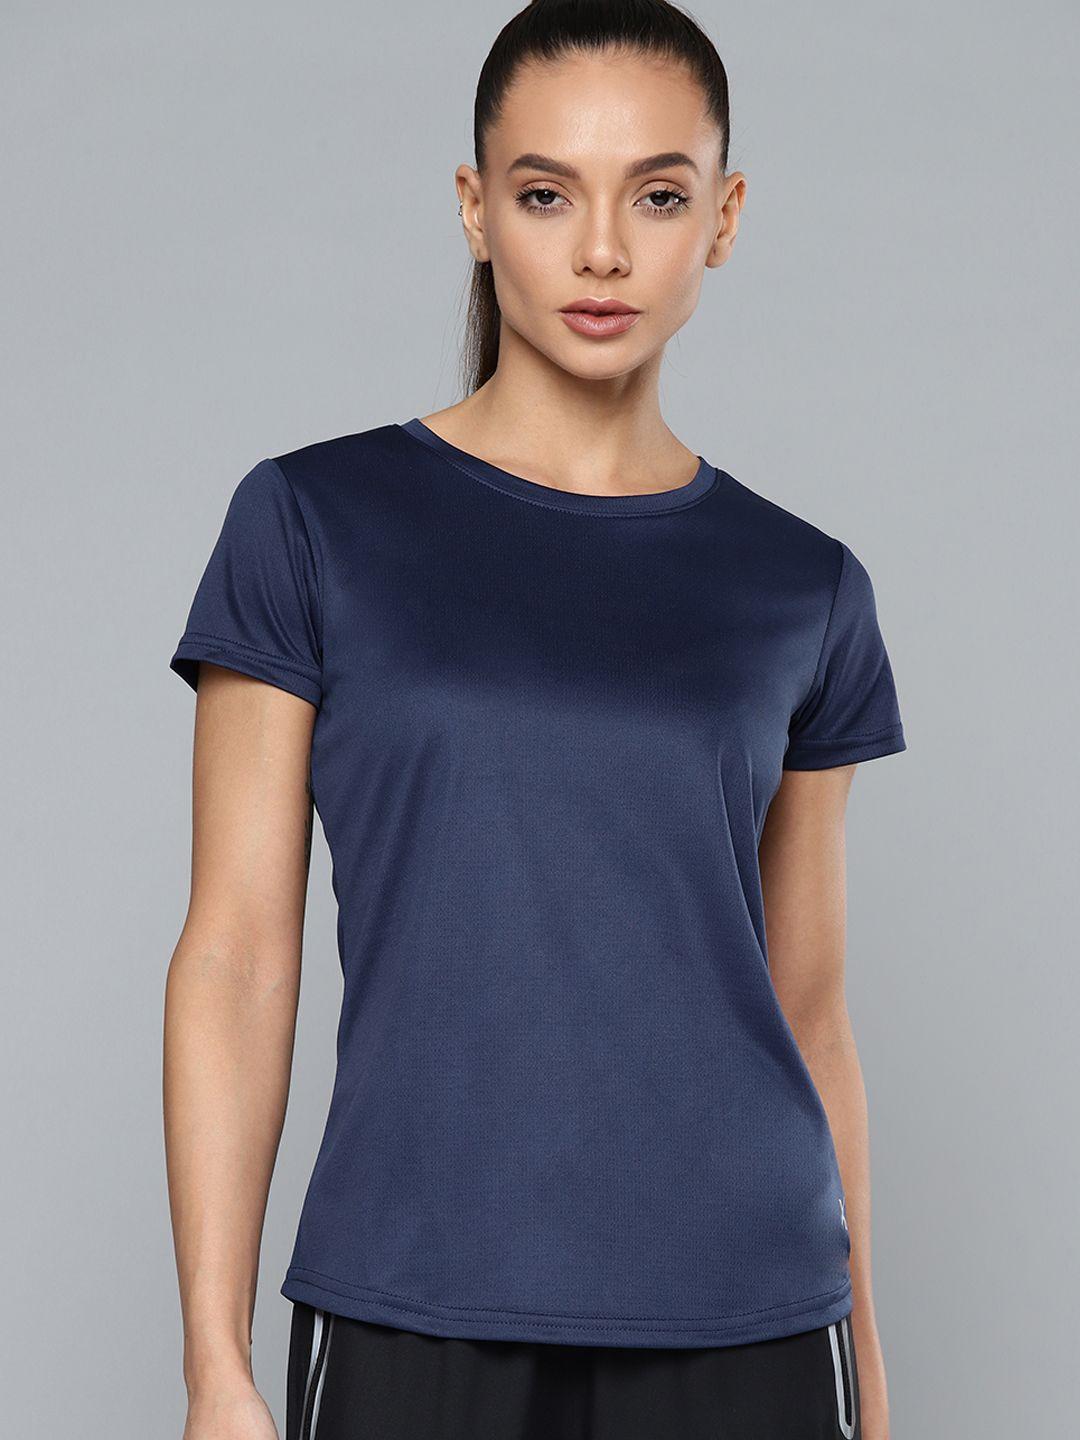 hrx-by-hrithik-roshan-women-navy-blue-running-t-shirt